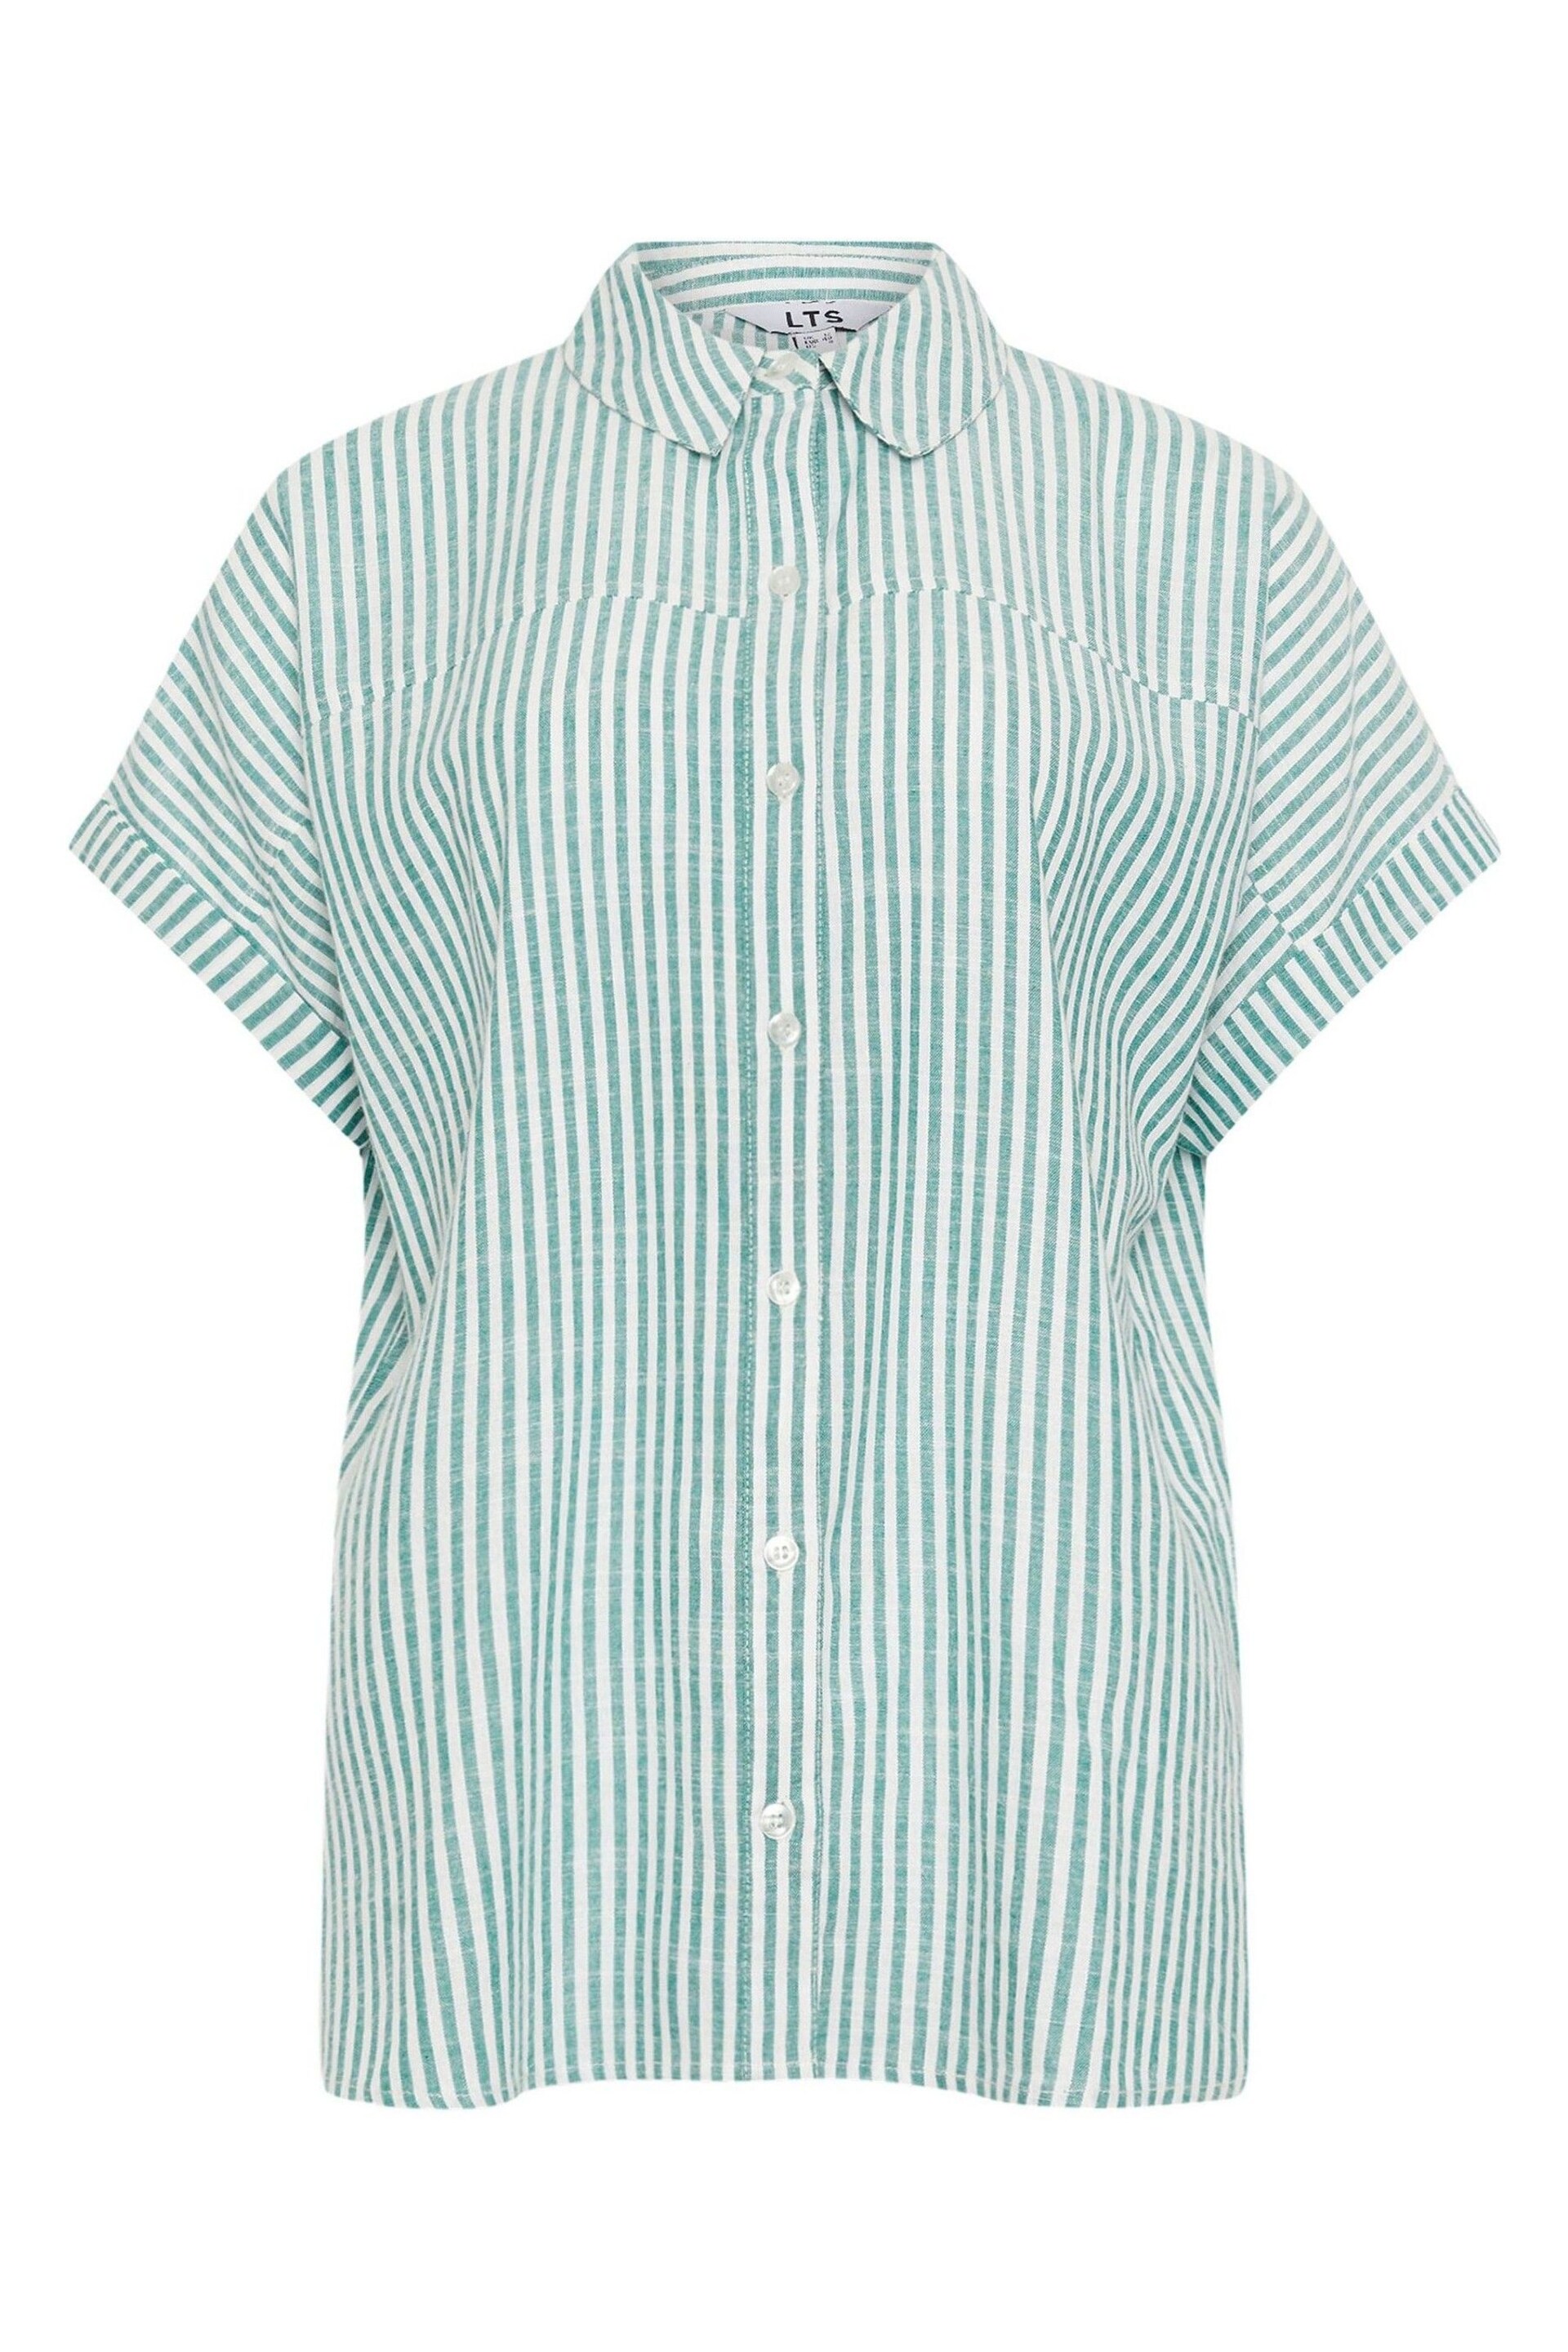 Long Tall Sally Green Stripe Short Sleeve Shirt - Image 6 of 6